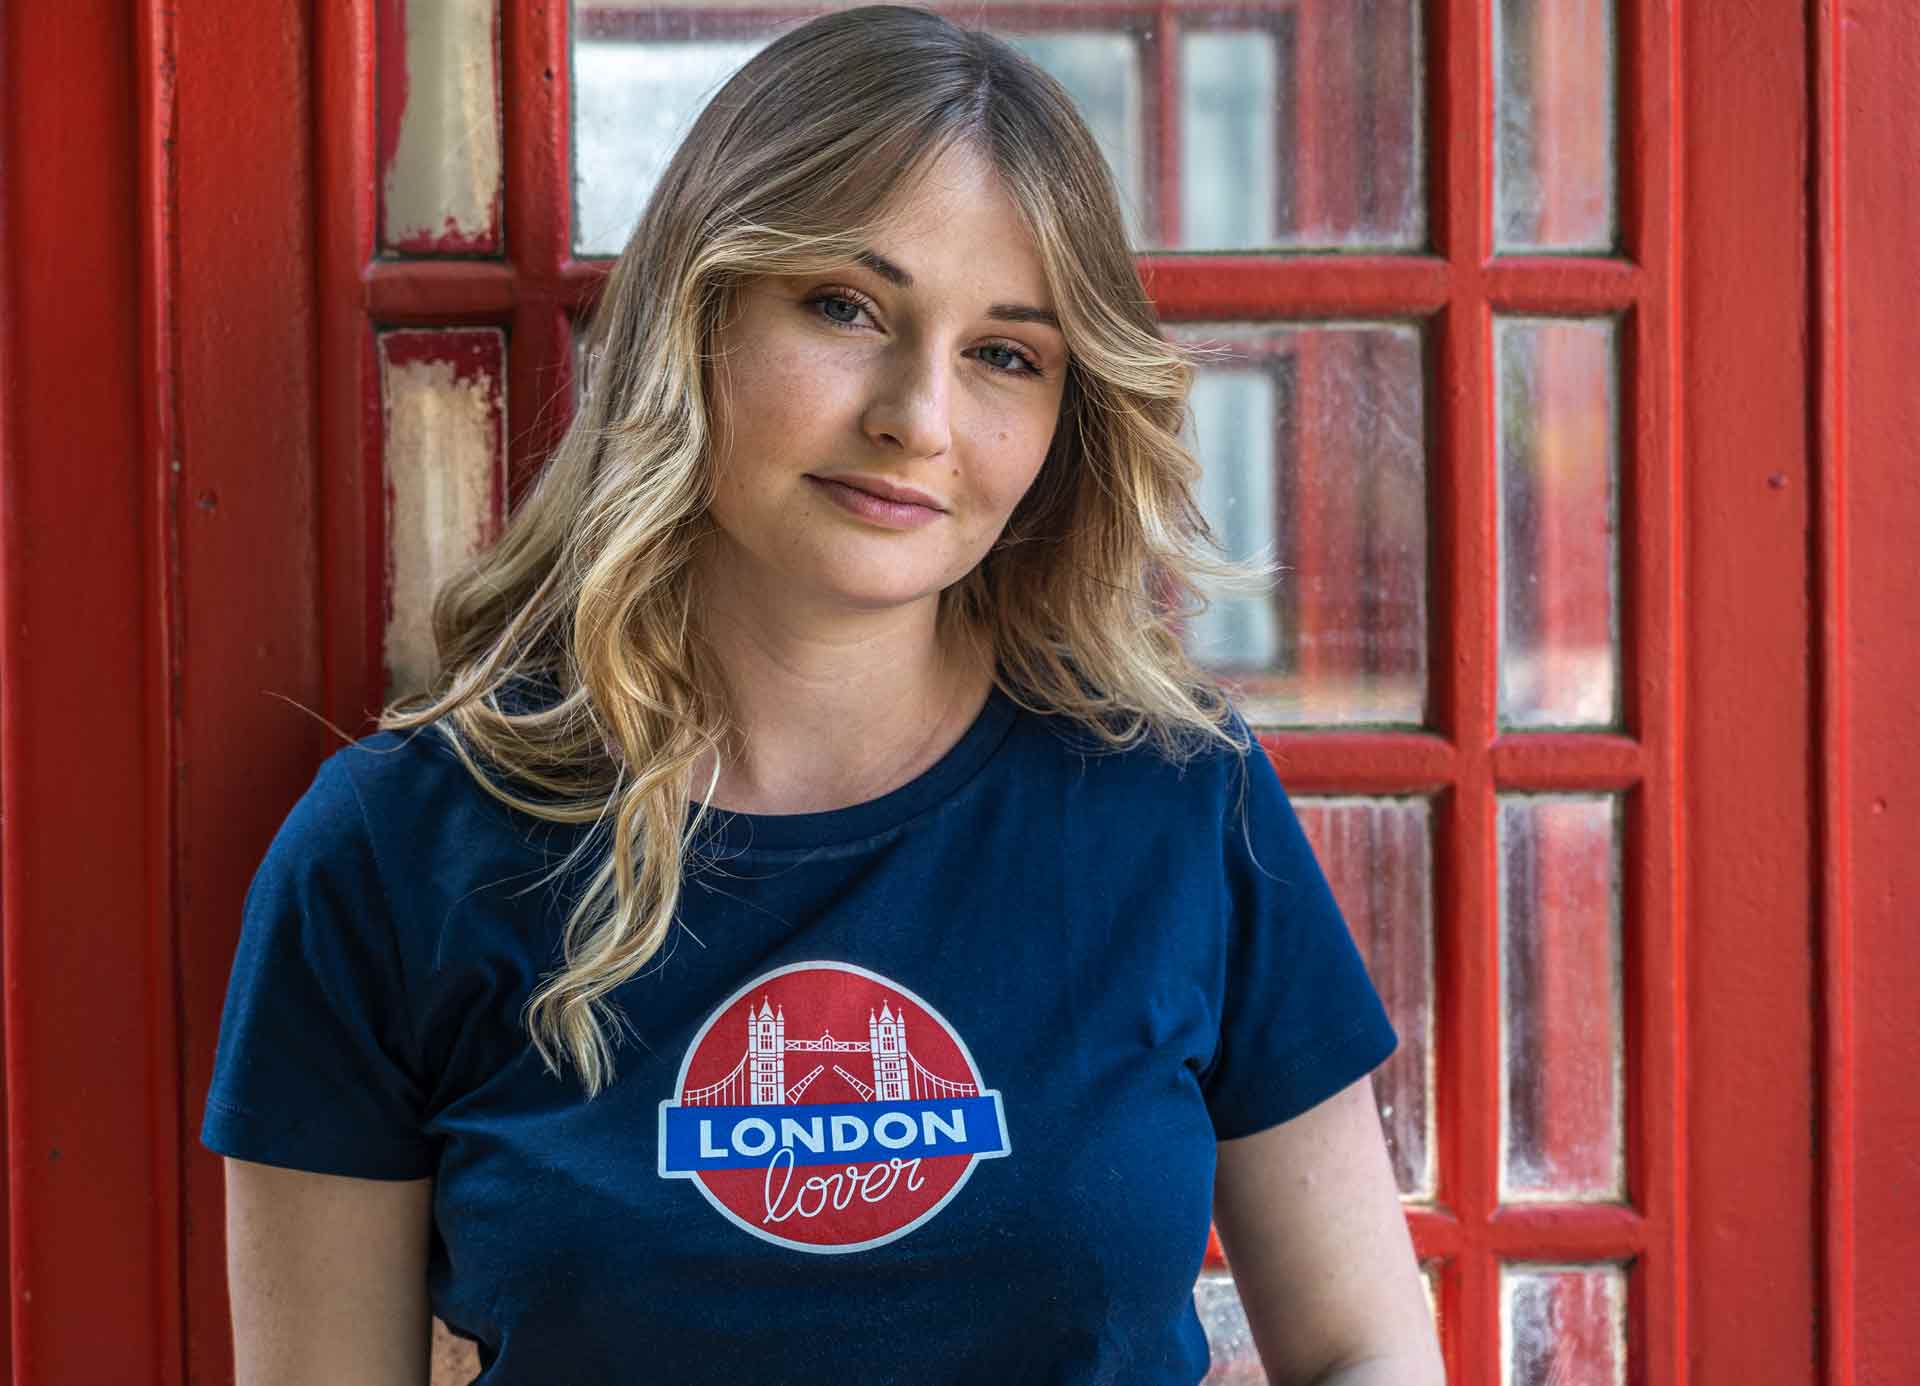 London-lover-t-shirt